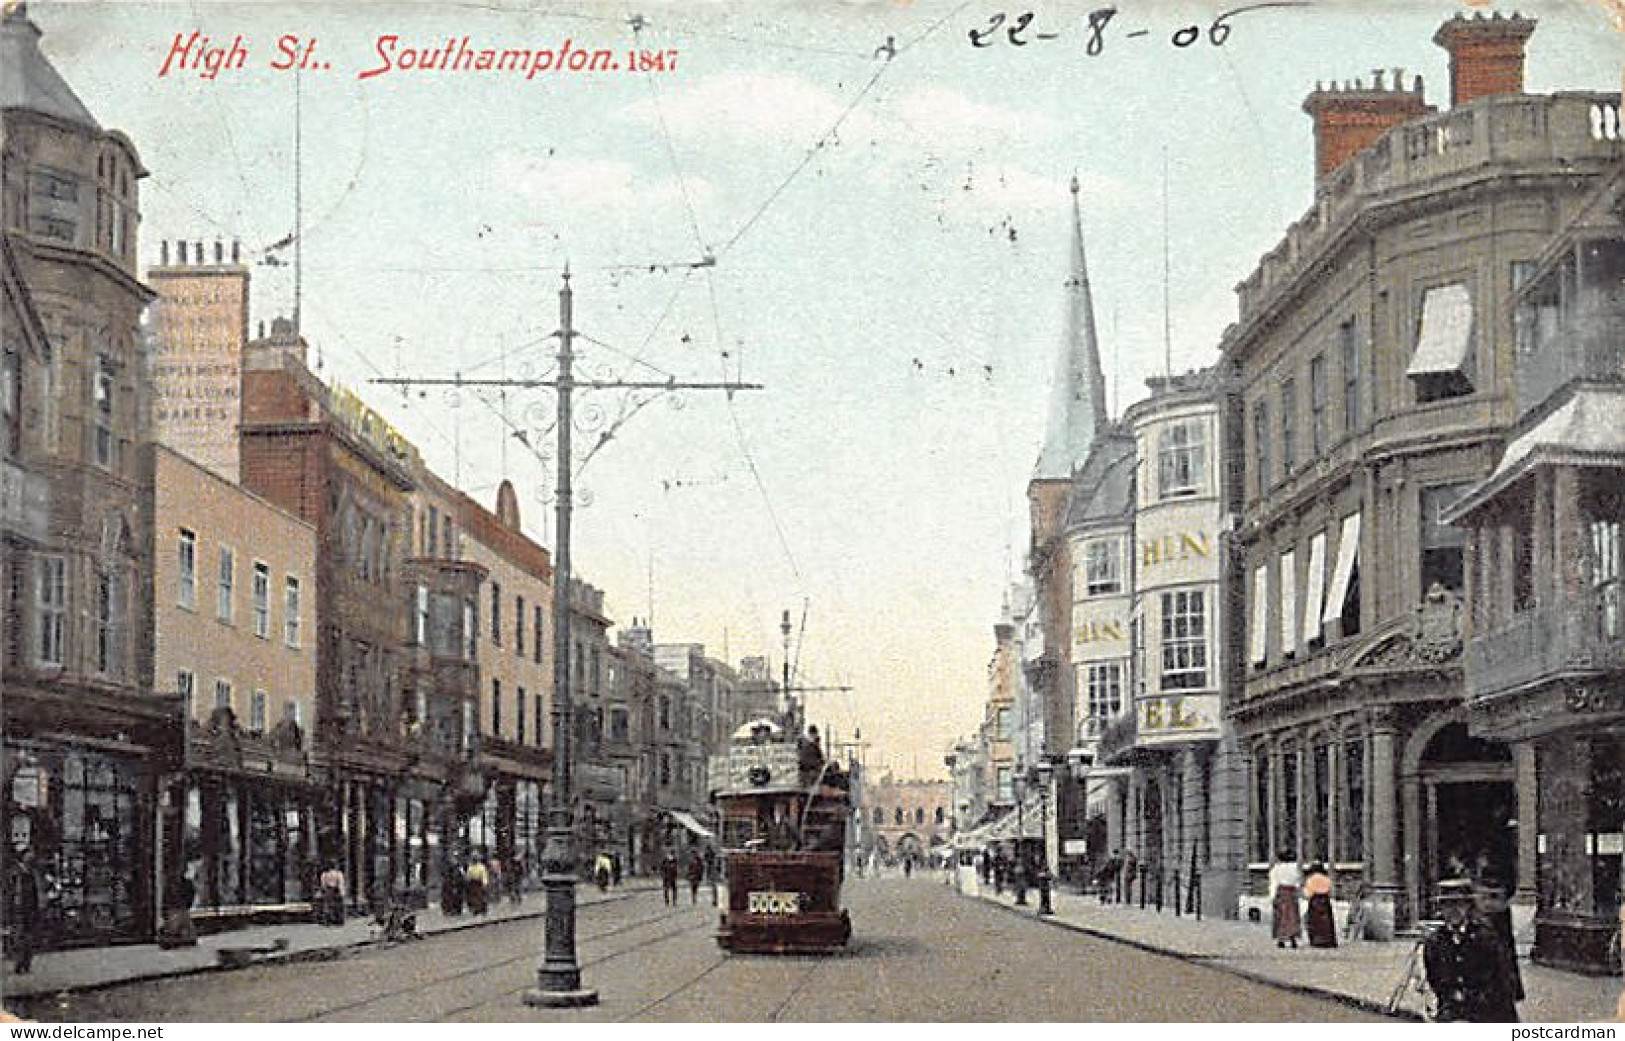 England - Hants - SOUTHAMPTON High St., 1847 - Southampton